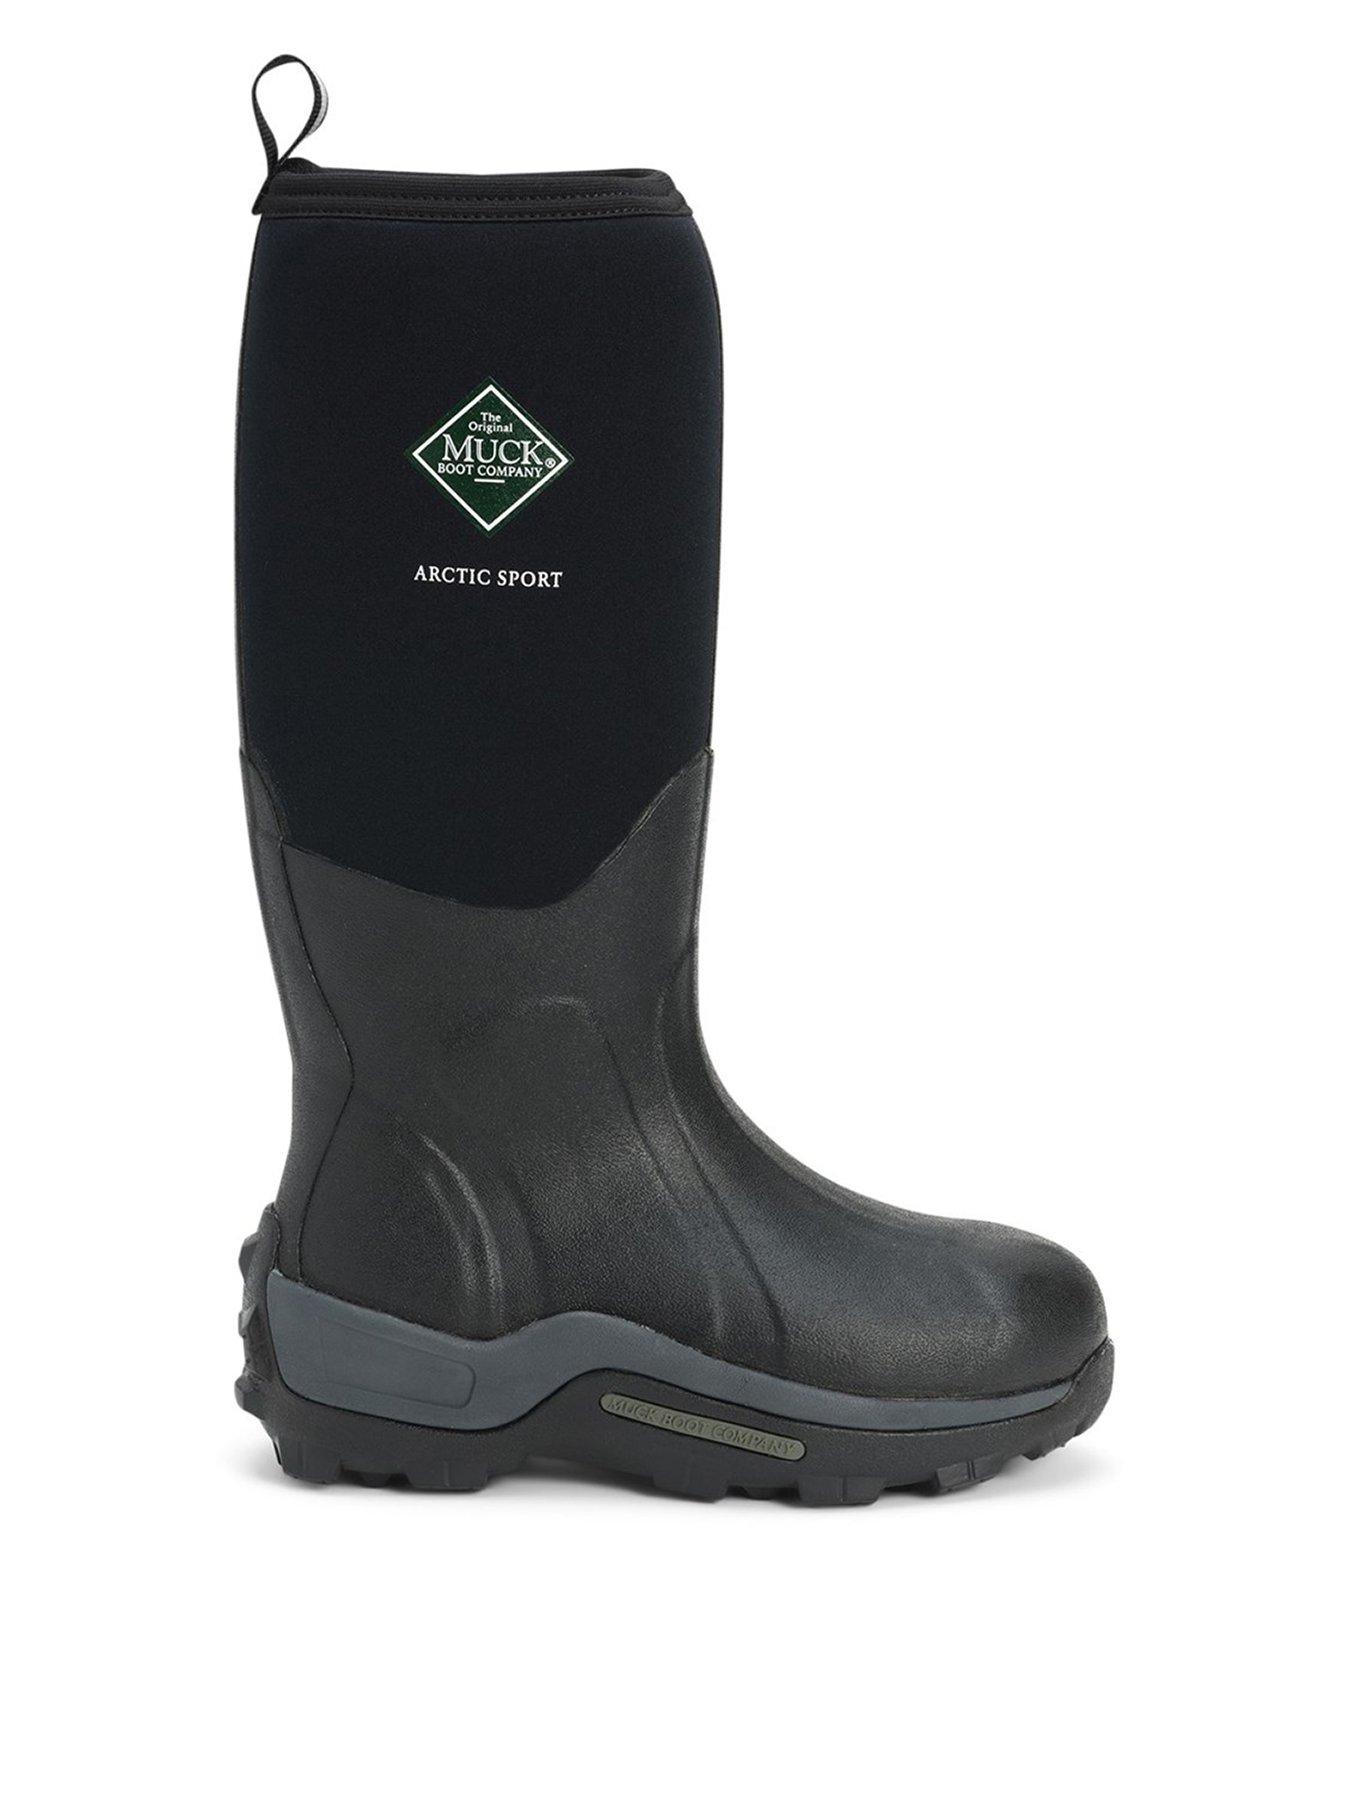 Muck Boots Mens Arctic Sport - Black, Black, Size 6, Men